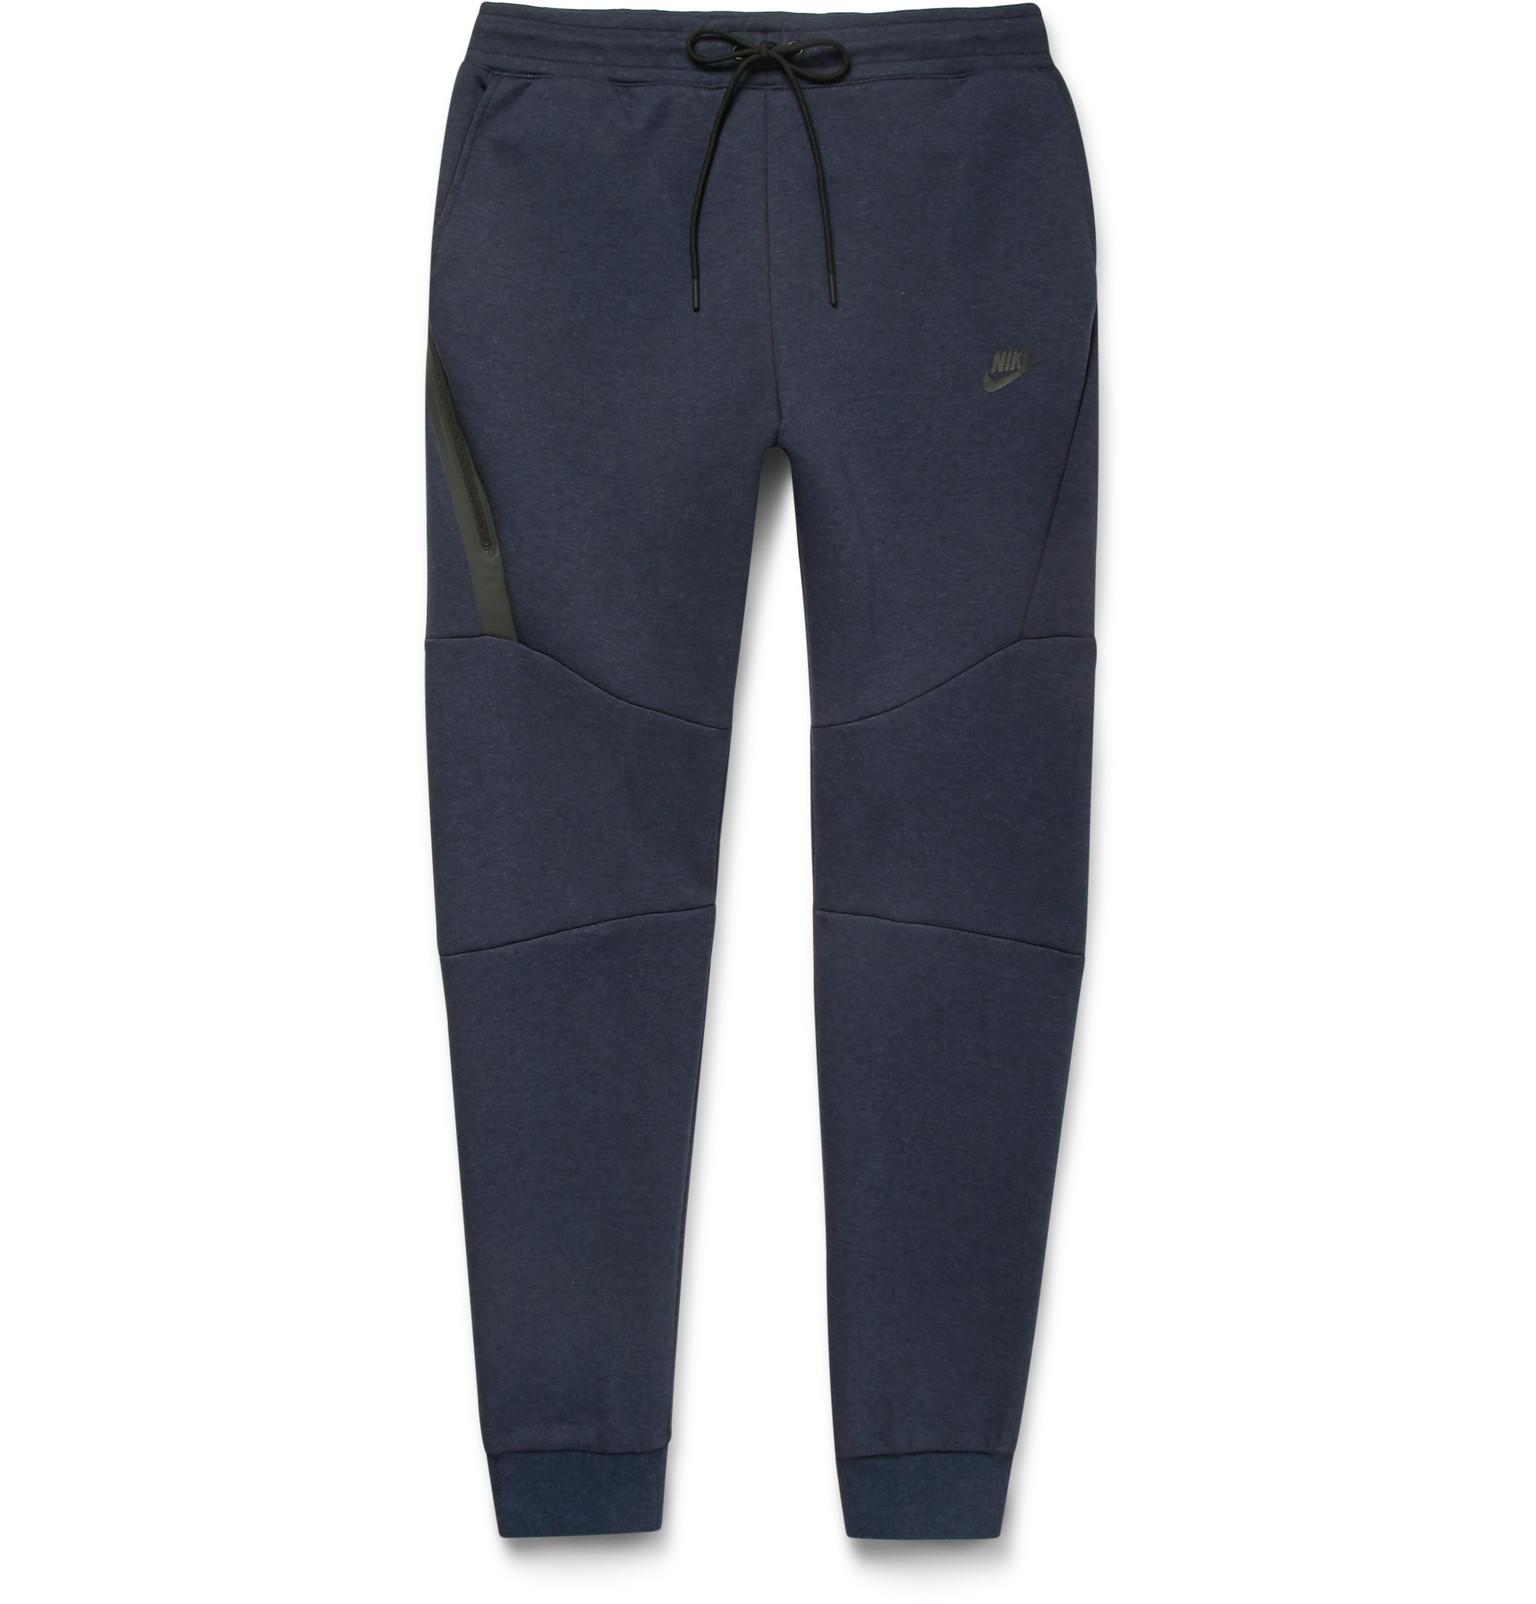 Lyst - Nike Tapered Cotton-blend Tech Fleece Sweatpants in Blue for Men